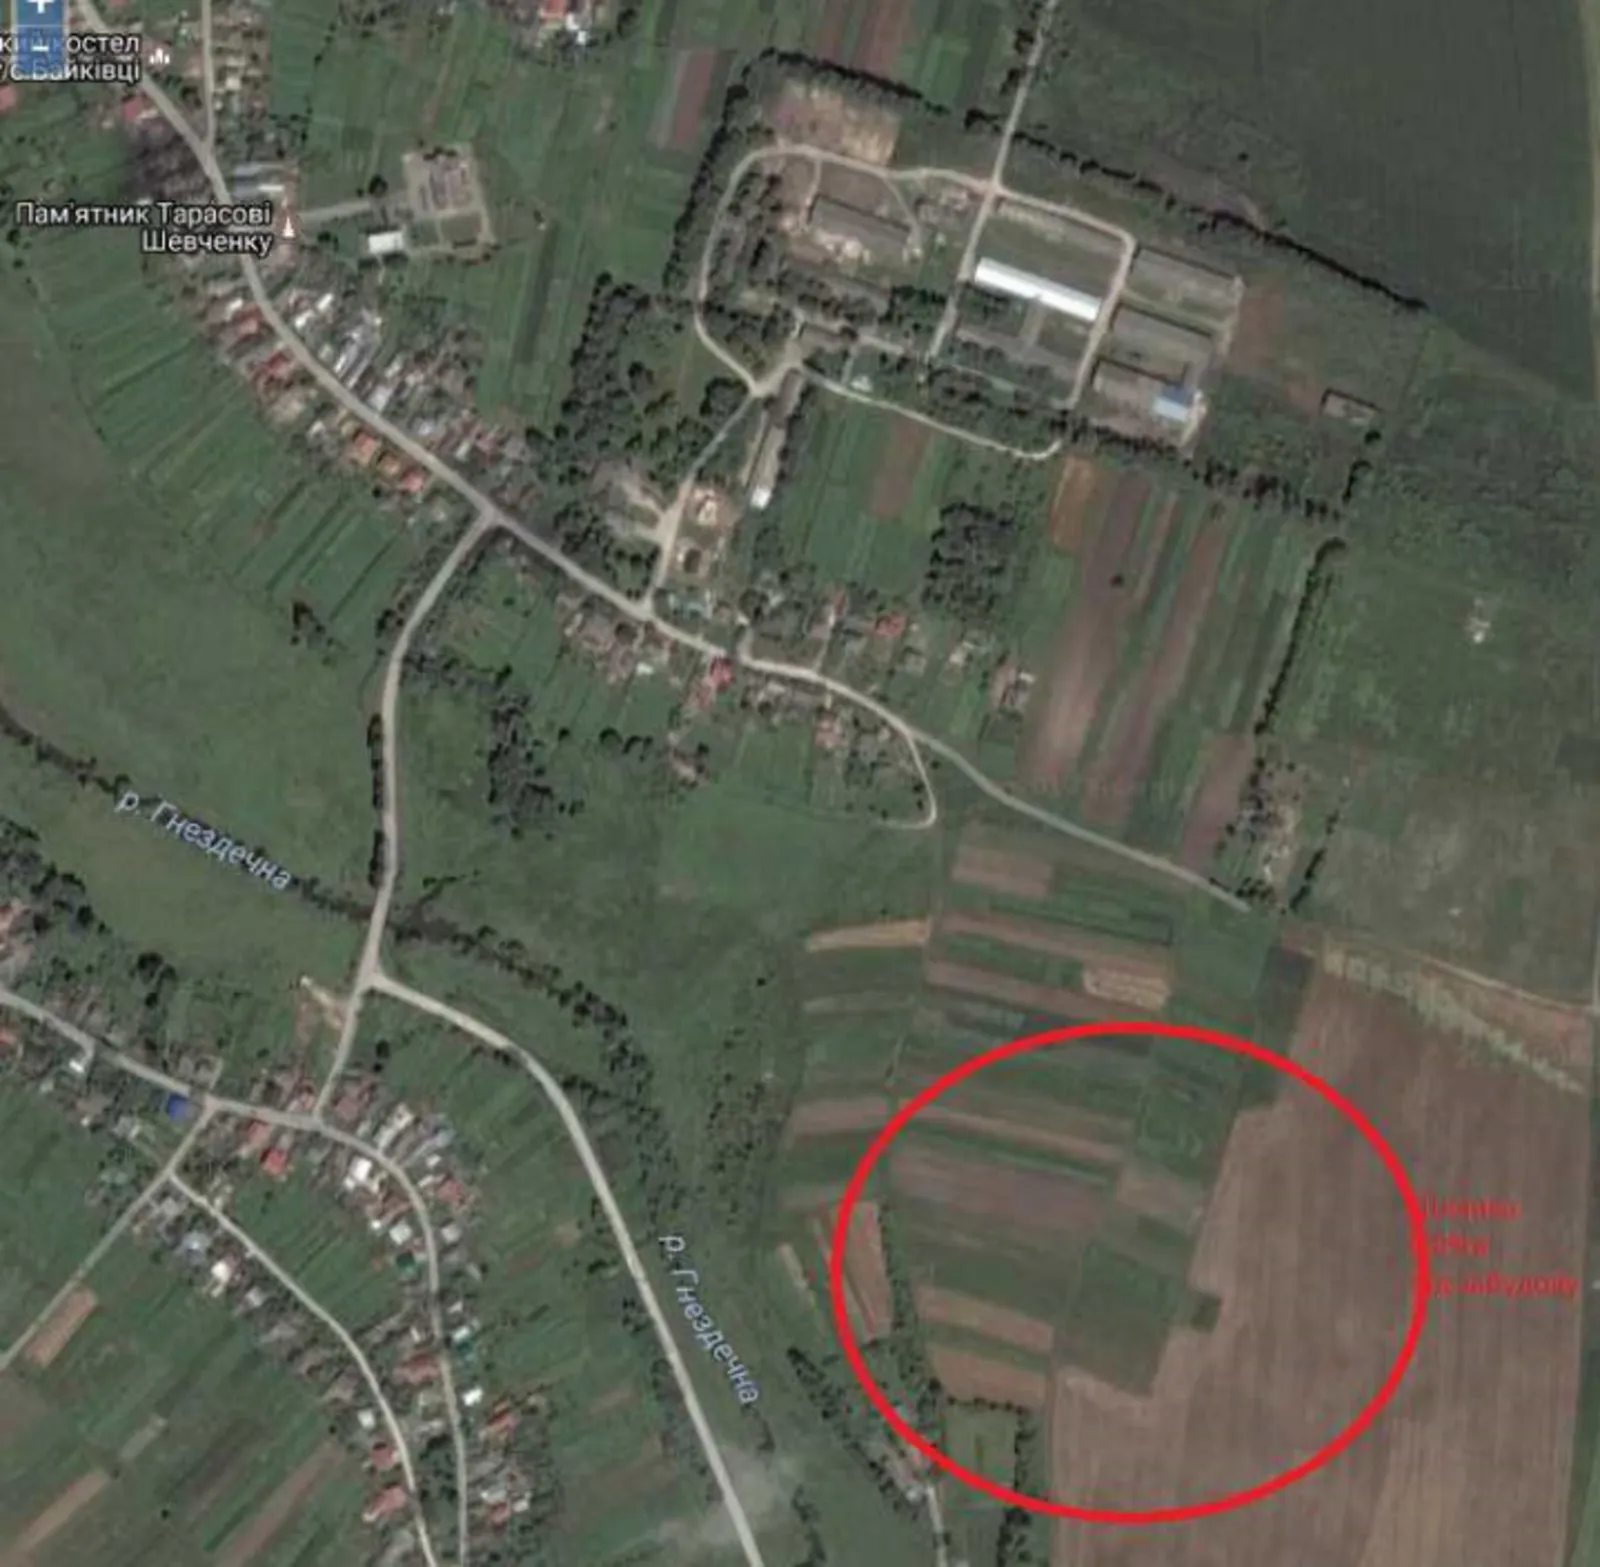 Land for sale for residential construction. Za sadikom, u kintsi sela, Baykovtsy. 